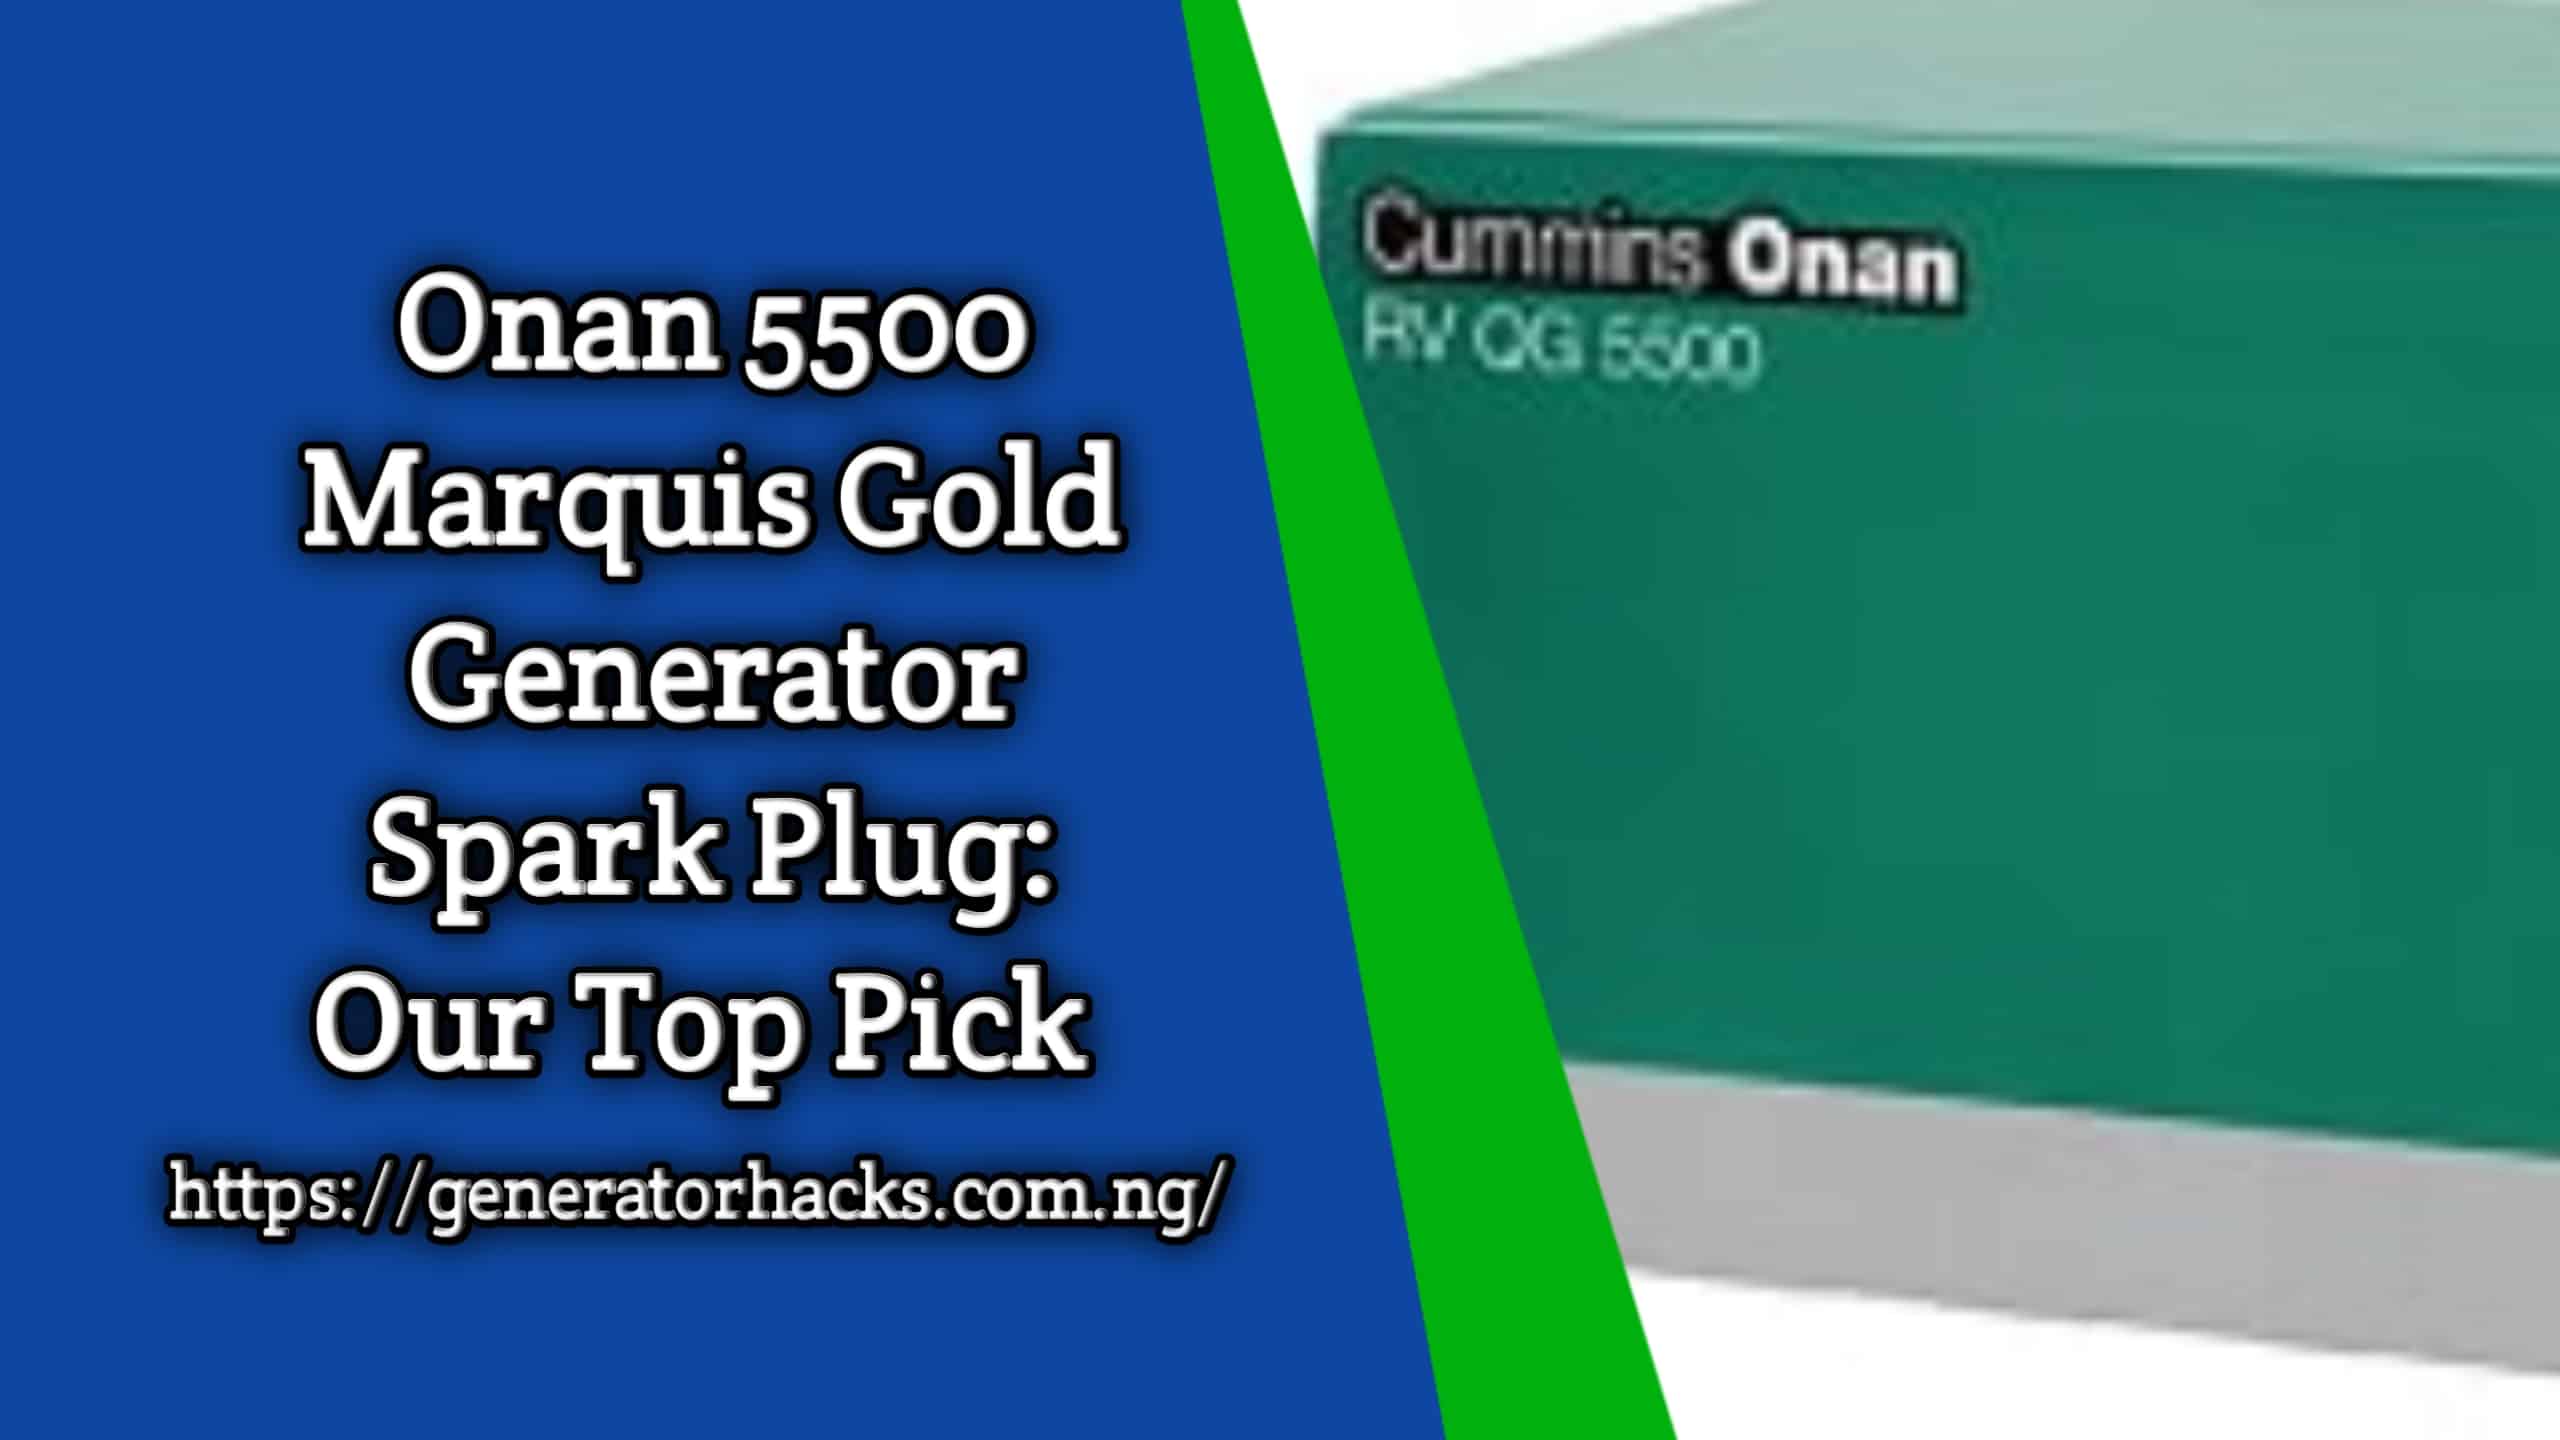 Onan 5500 Marquis Gold Generator Spark Plug